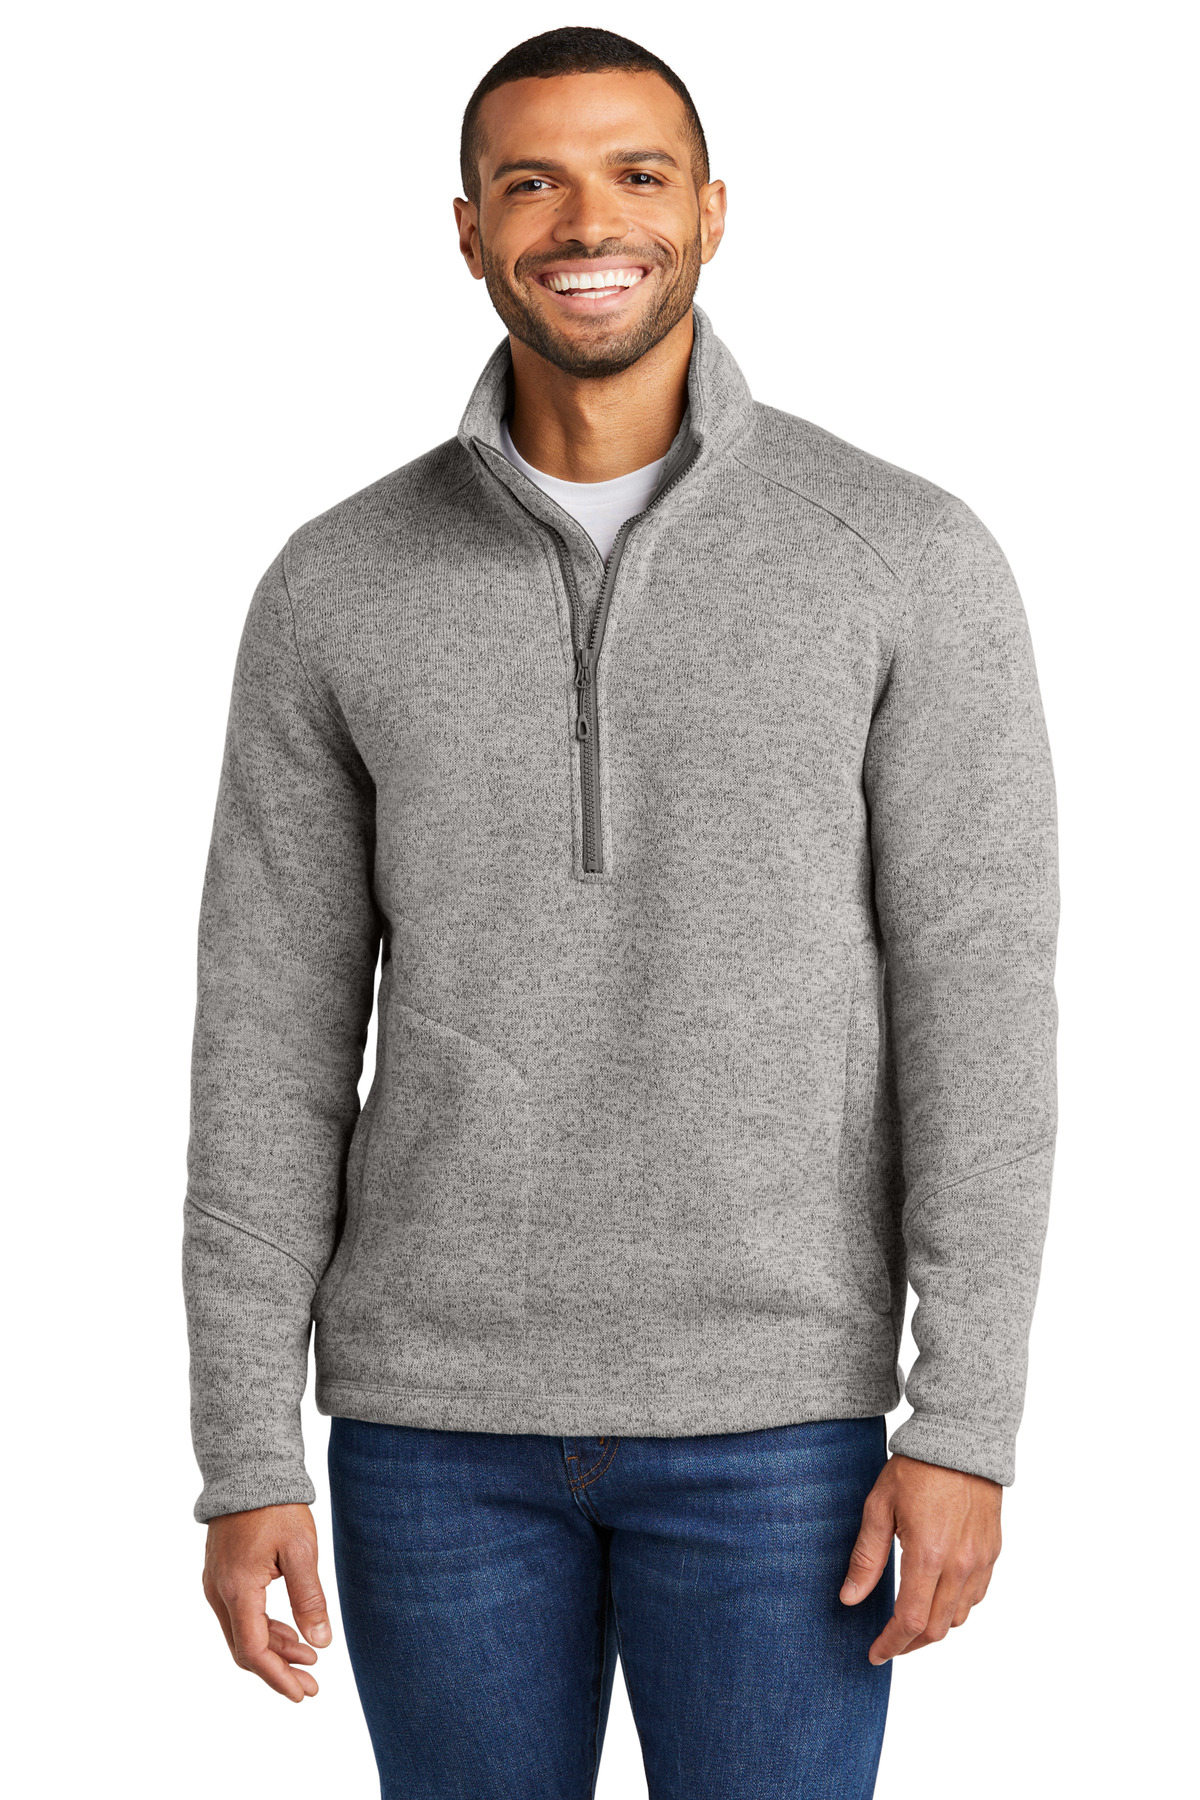 Port Authority Arc Sweater Fleece 1/4-Zip-Port Authority